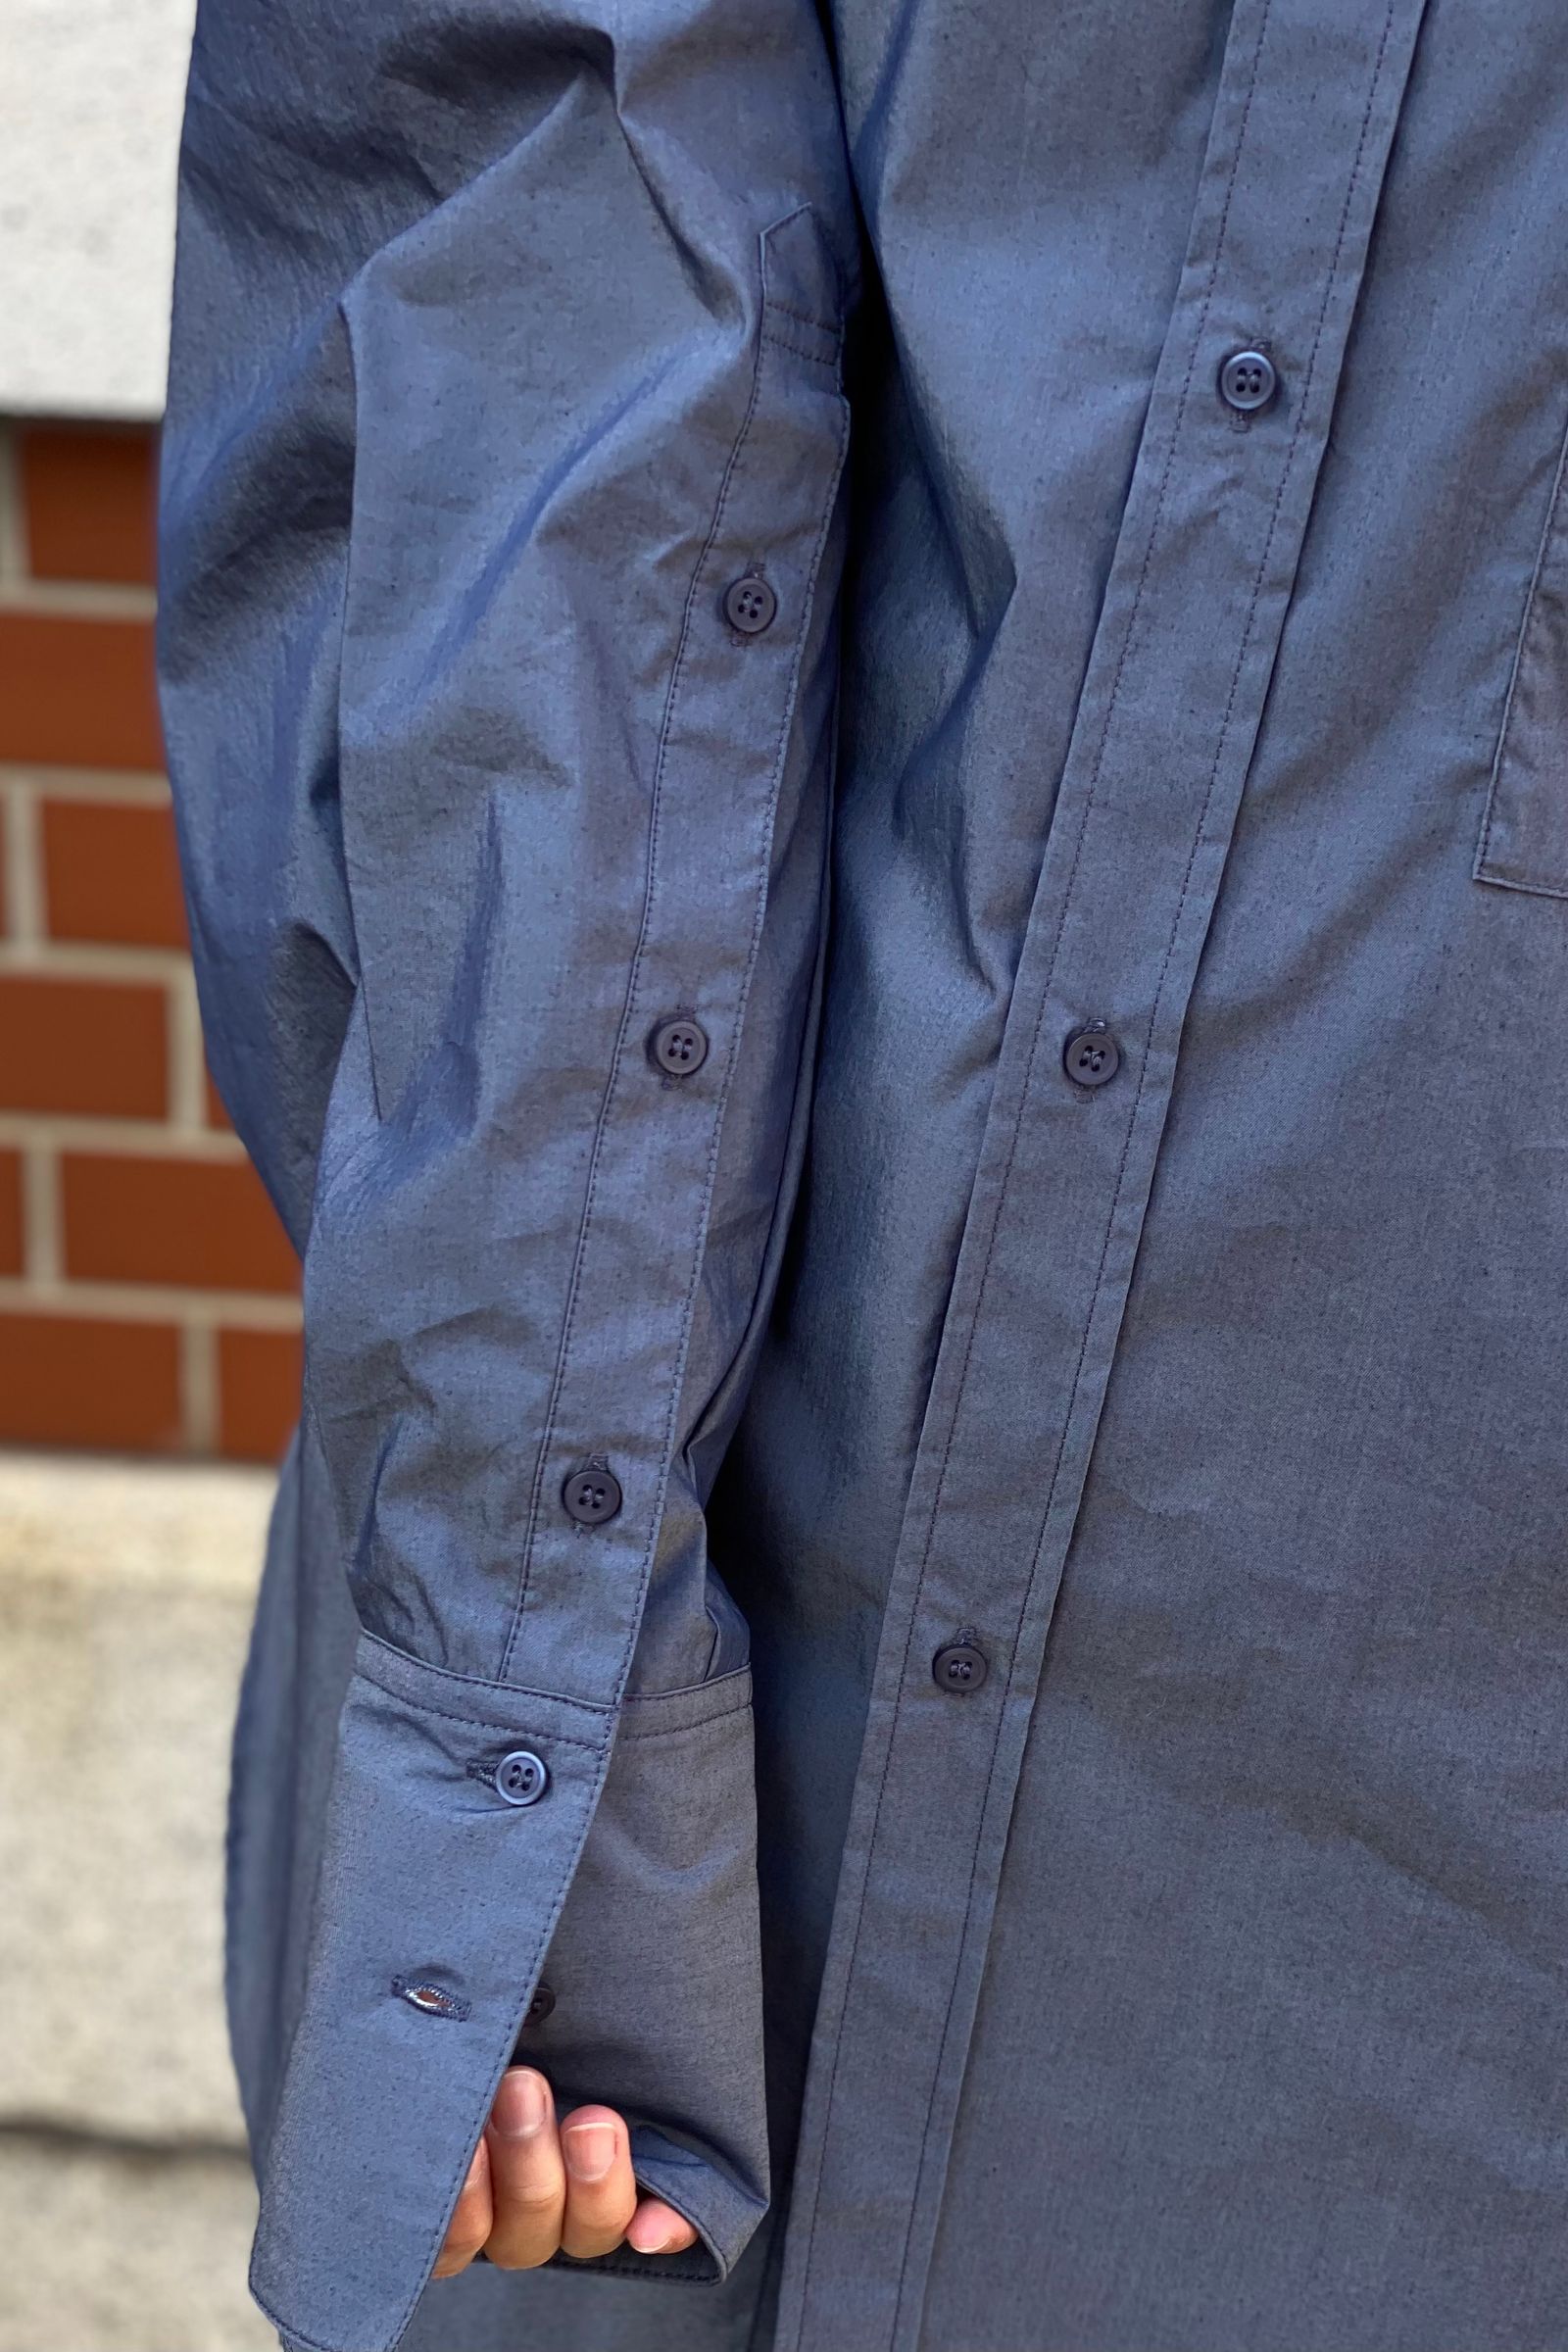 TODAYFUL - typewriter pocket shirts -s/blue-22aw | asterisk